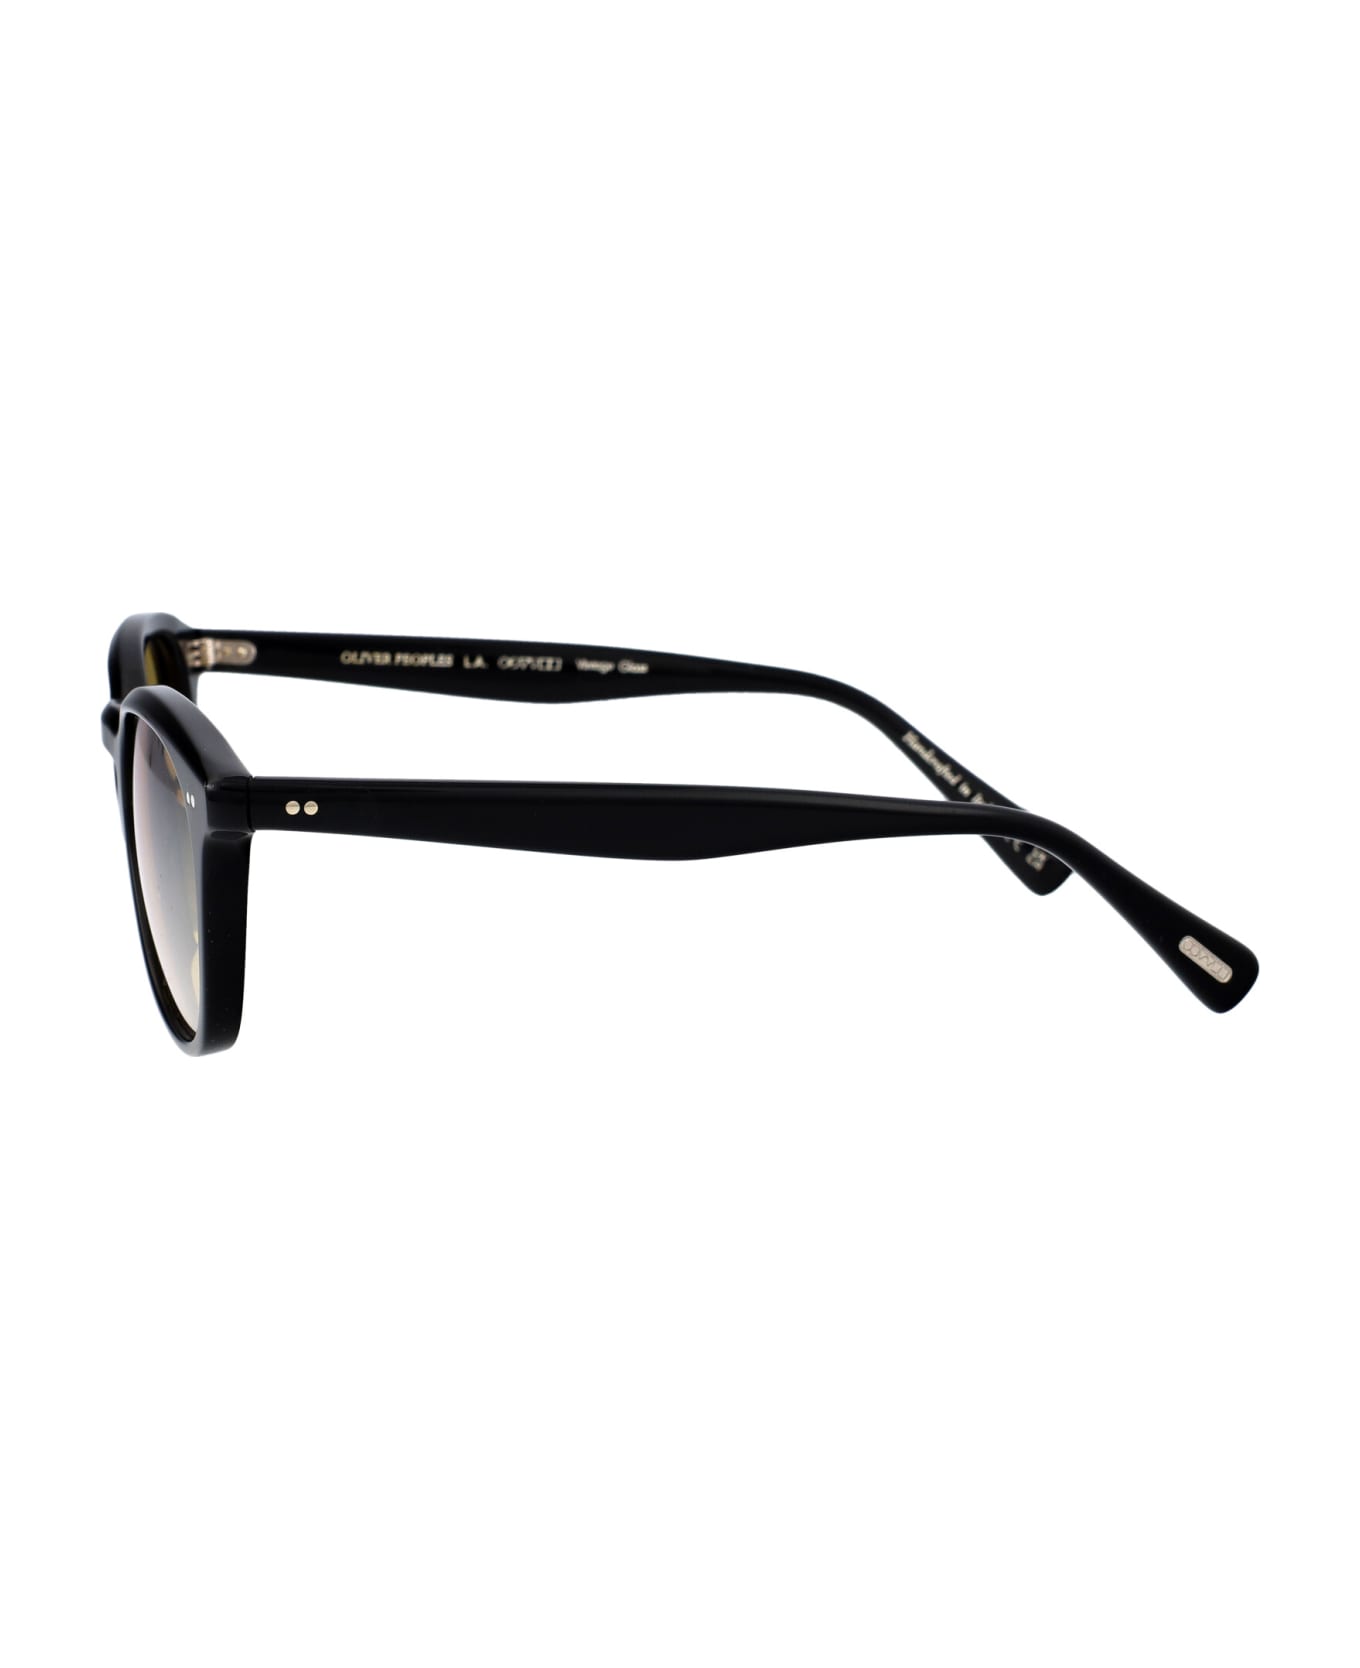 Oliver Peoples Desmon Sun Sunglasses - 10050F Black